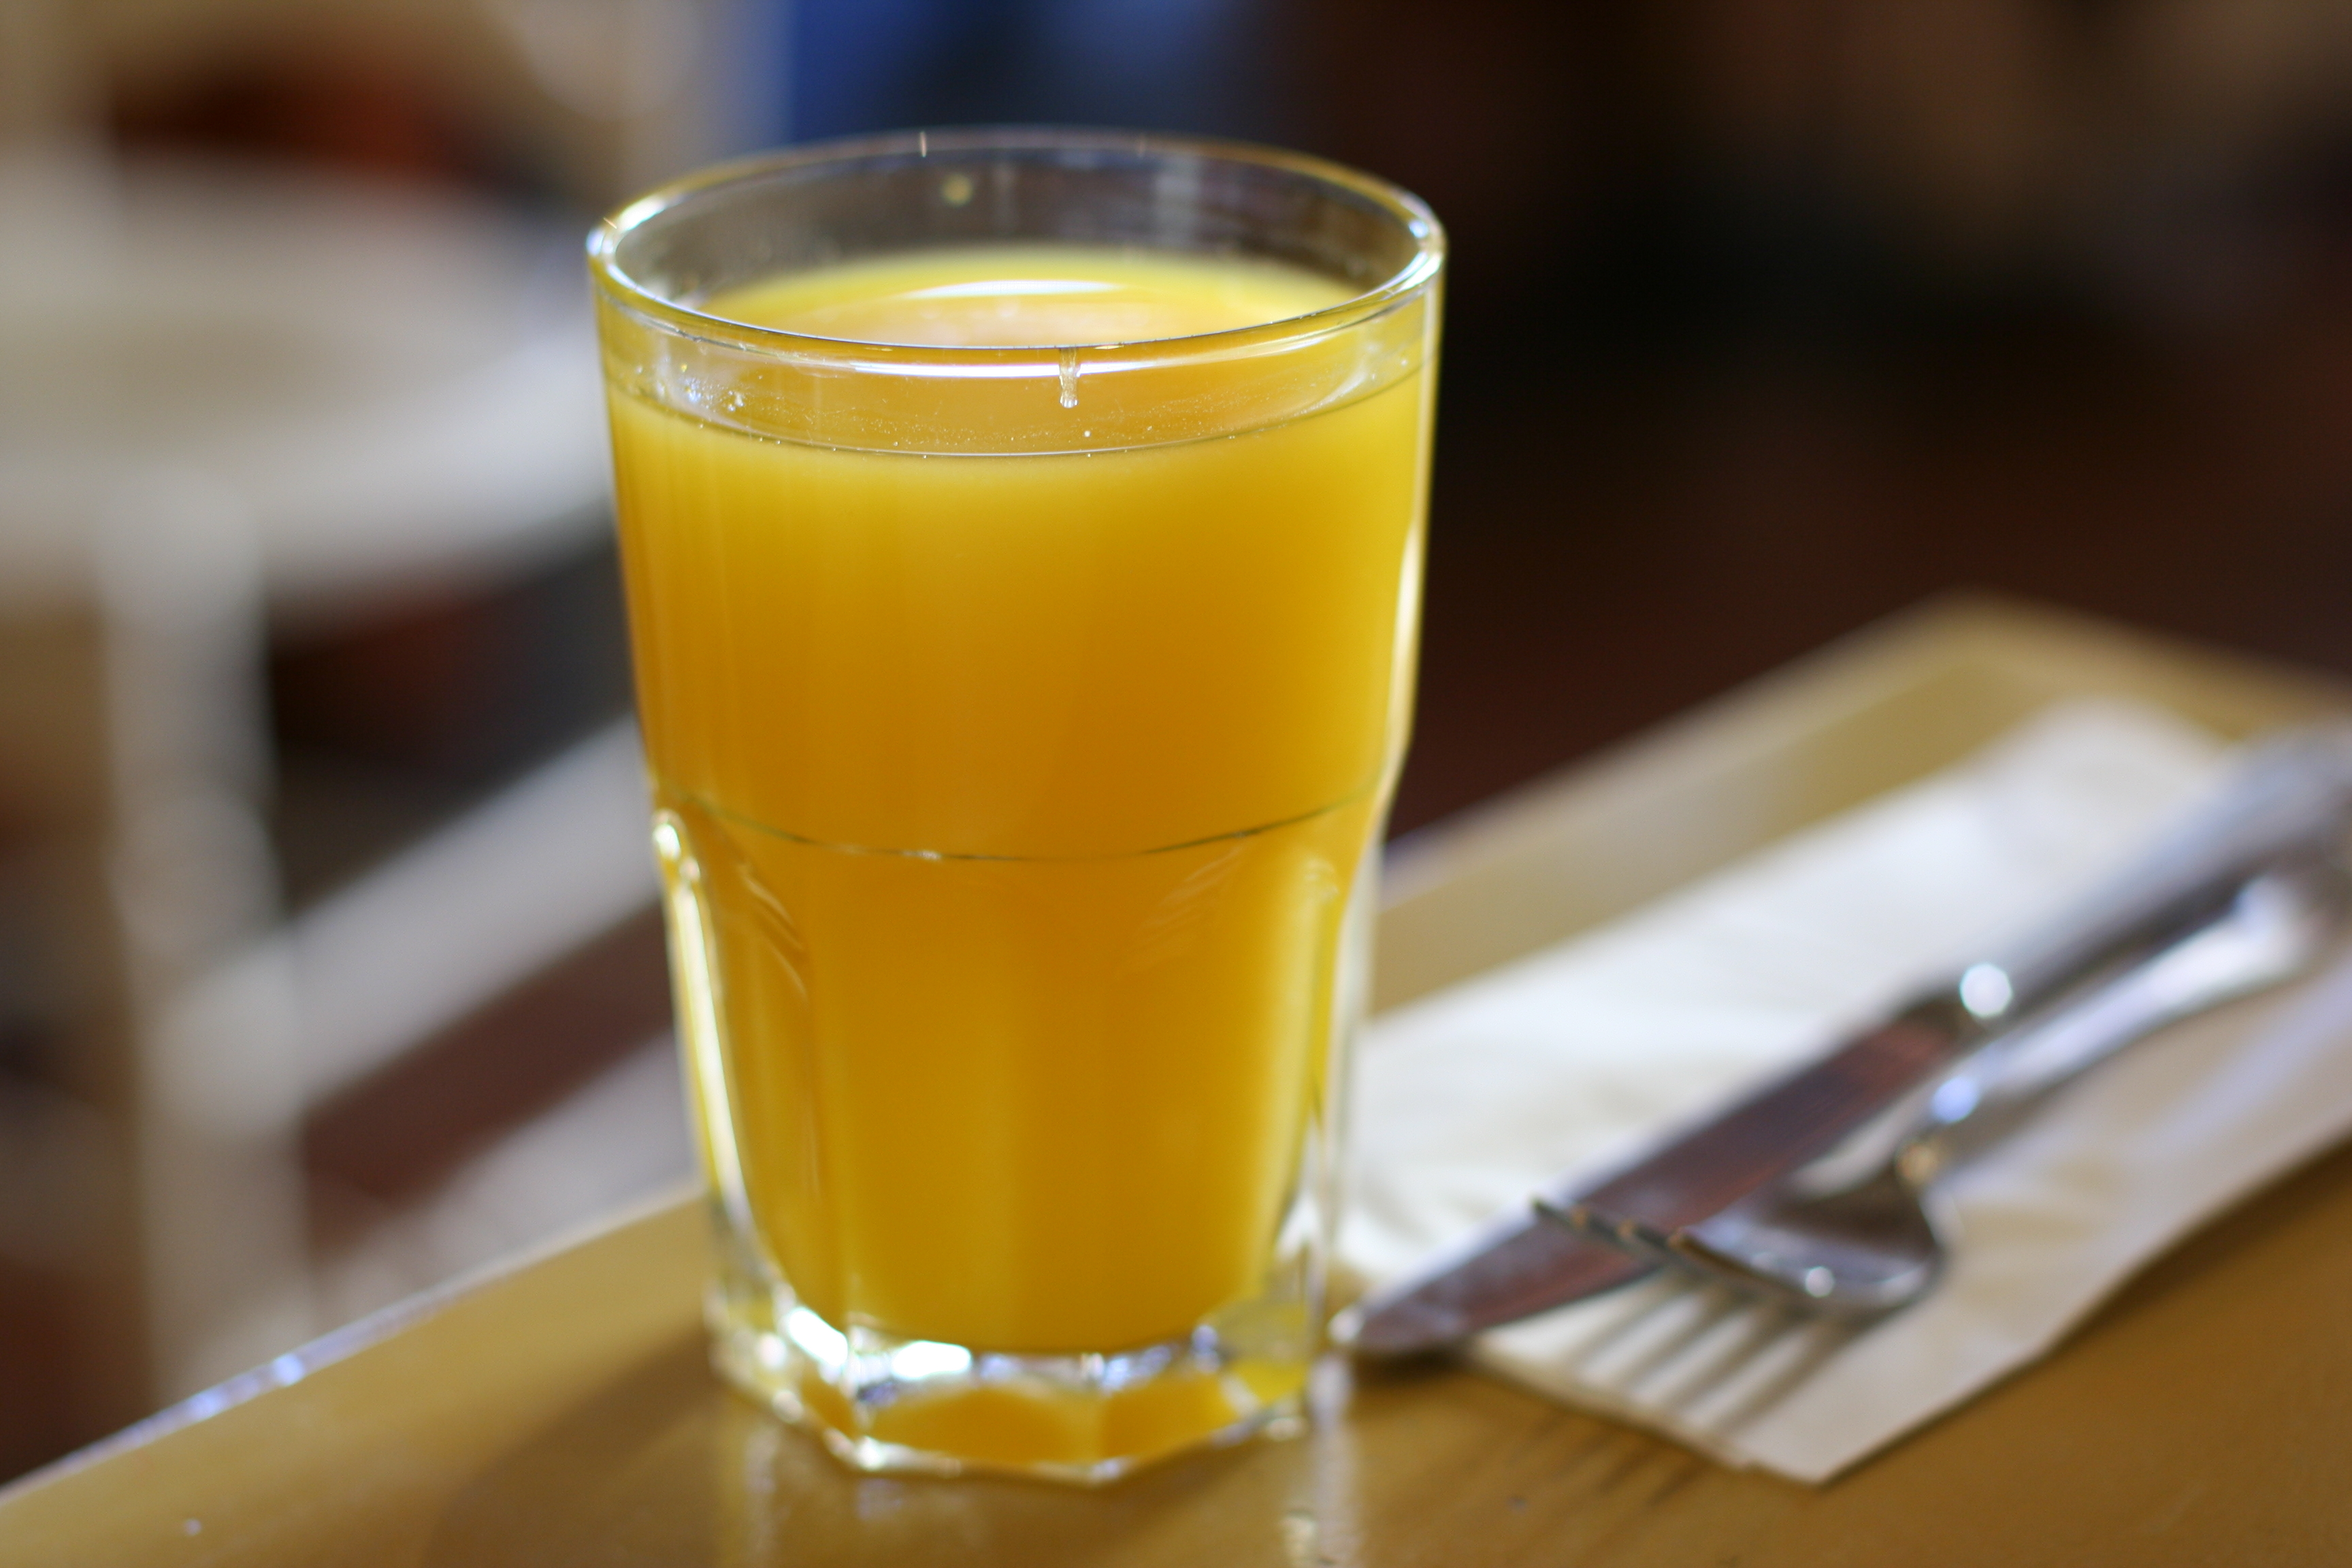 2018-03-09_Artikelbild Homepage Orange Juice Bald wird der Orangensaft teurer